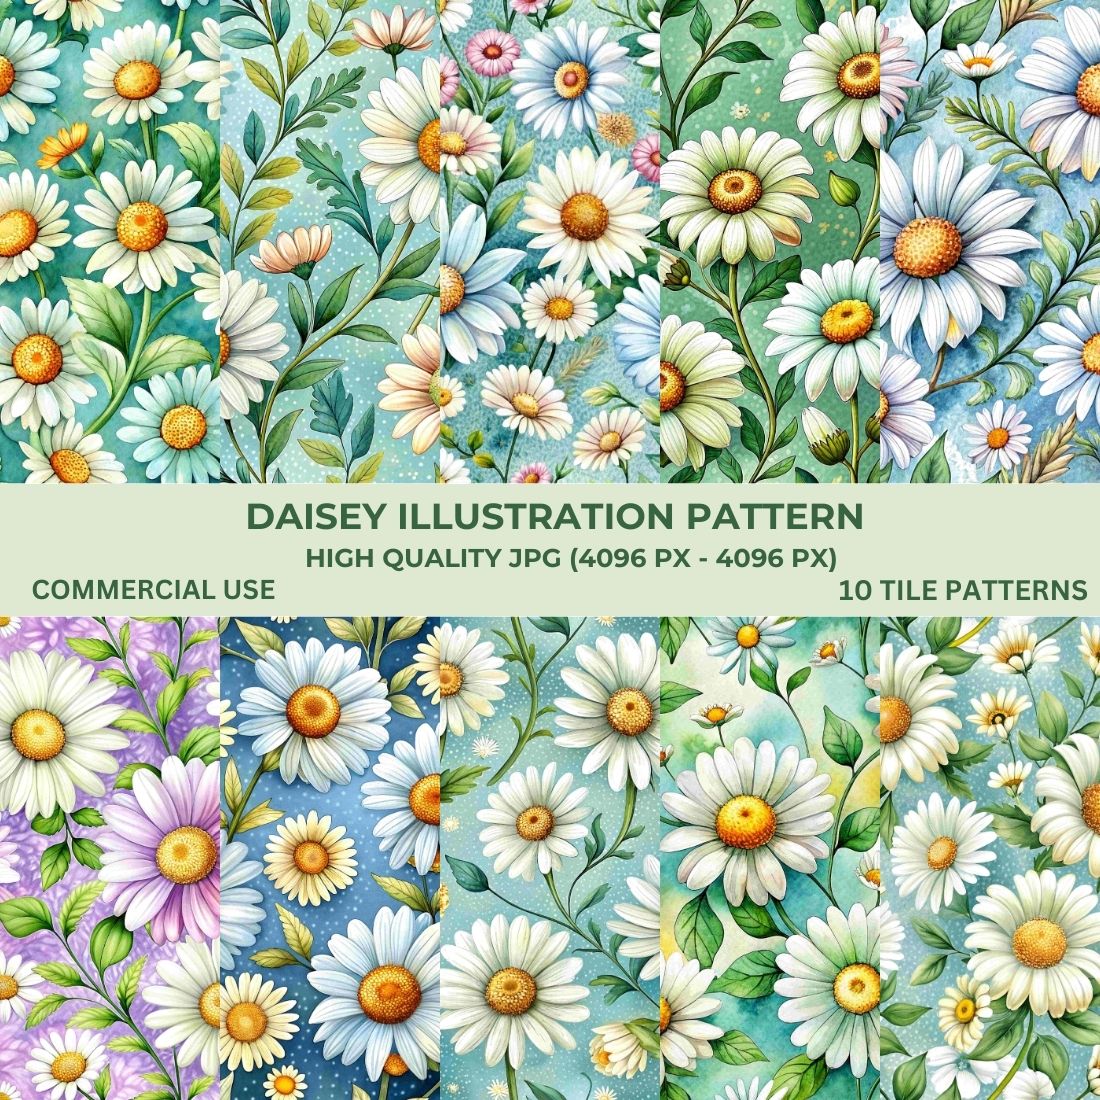 Daisy Illustration Pattern Bundle Vibrant Floral Designs cover image.